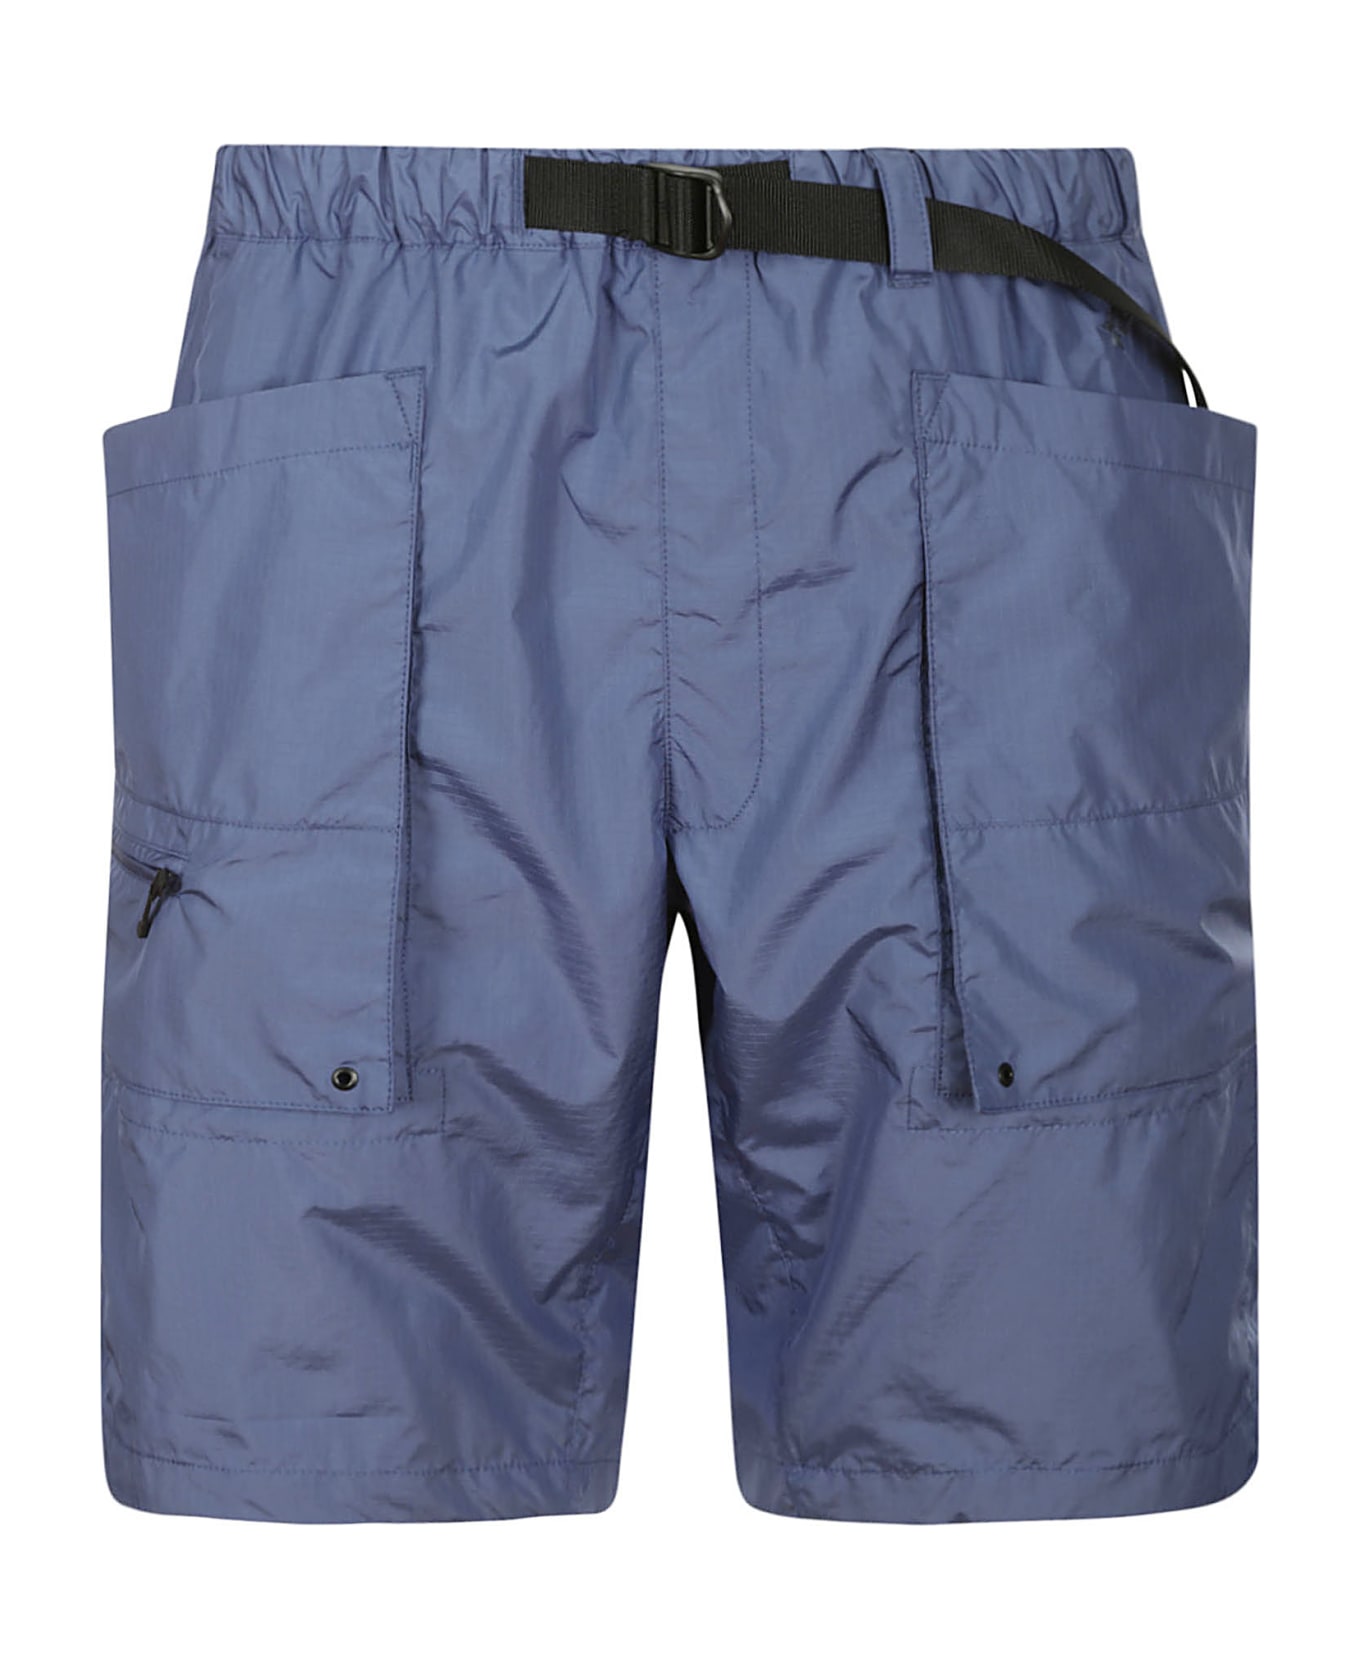 Goldwin Ripstop Cargo Shorts - Hb Horizon Blue ショートパンツ